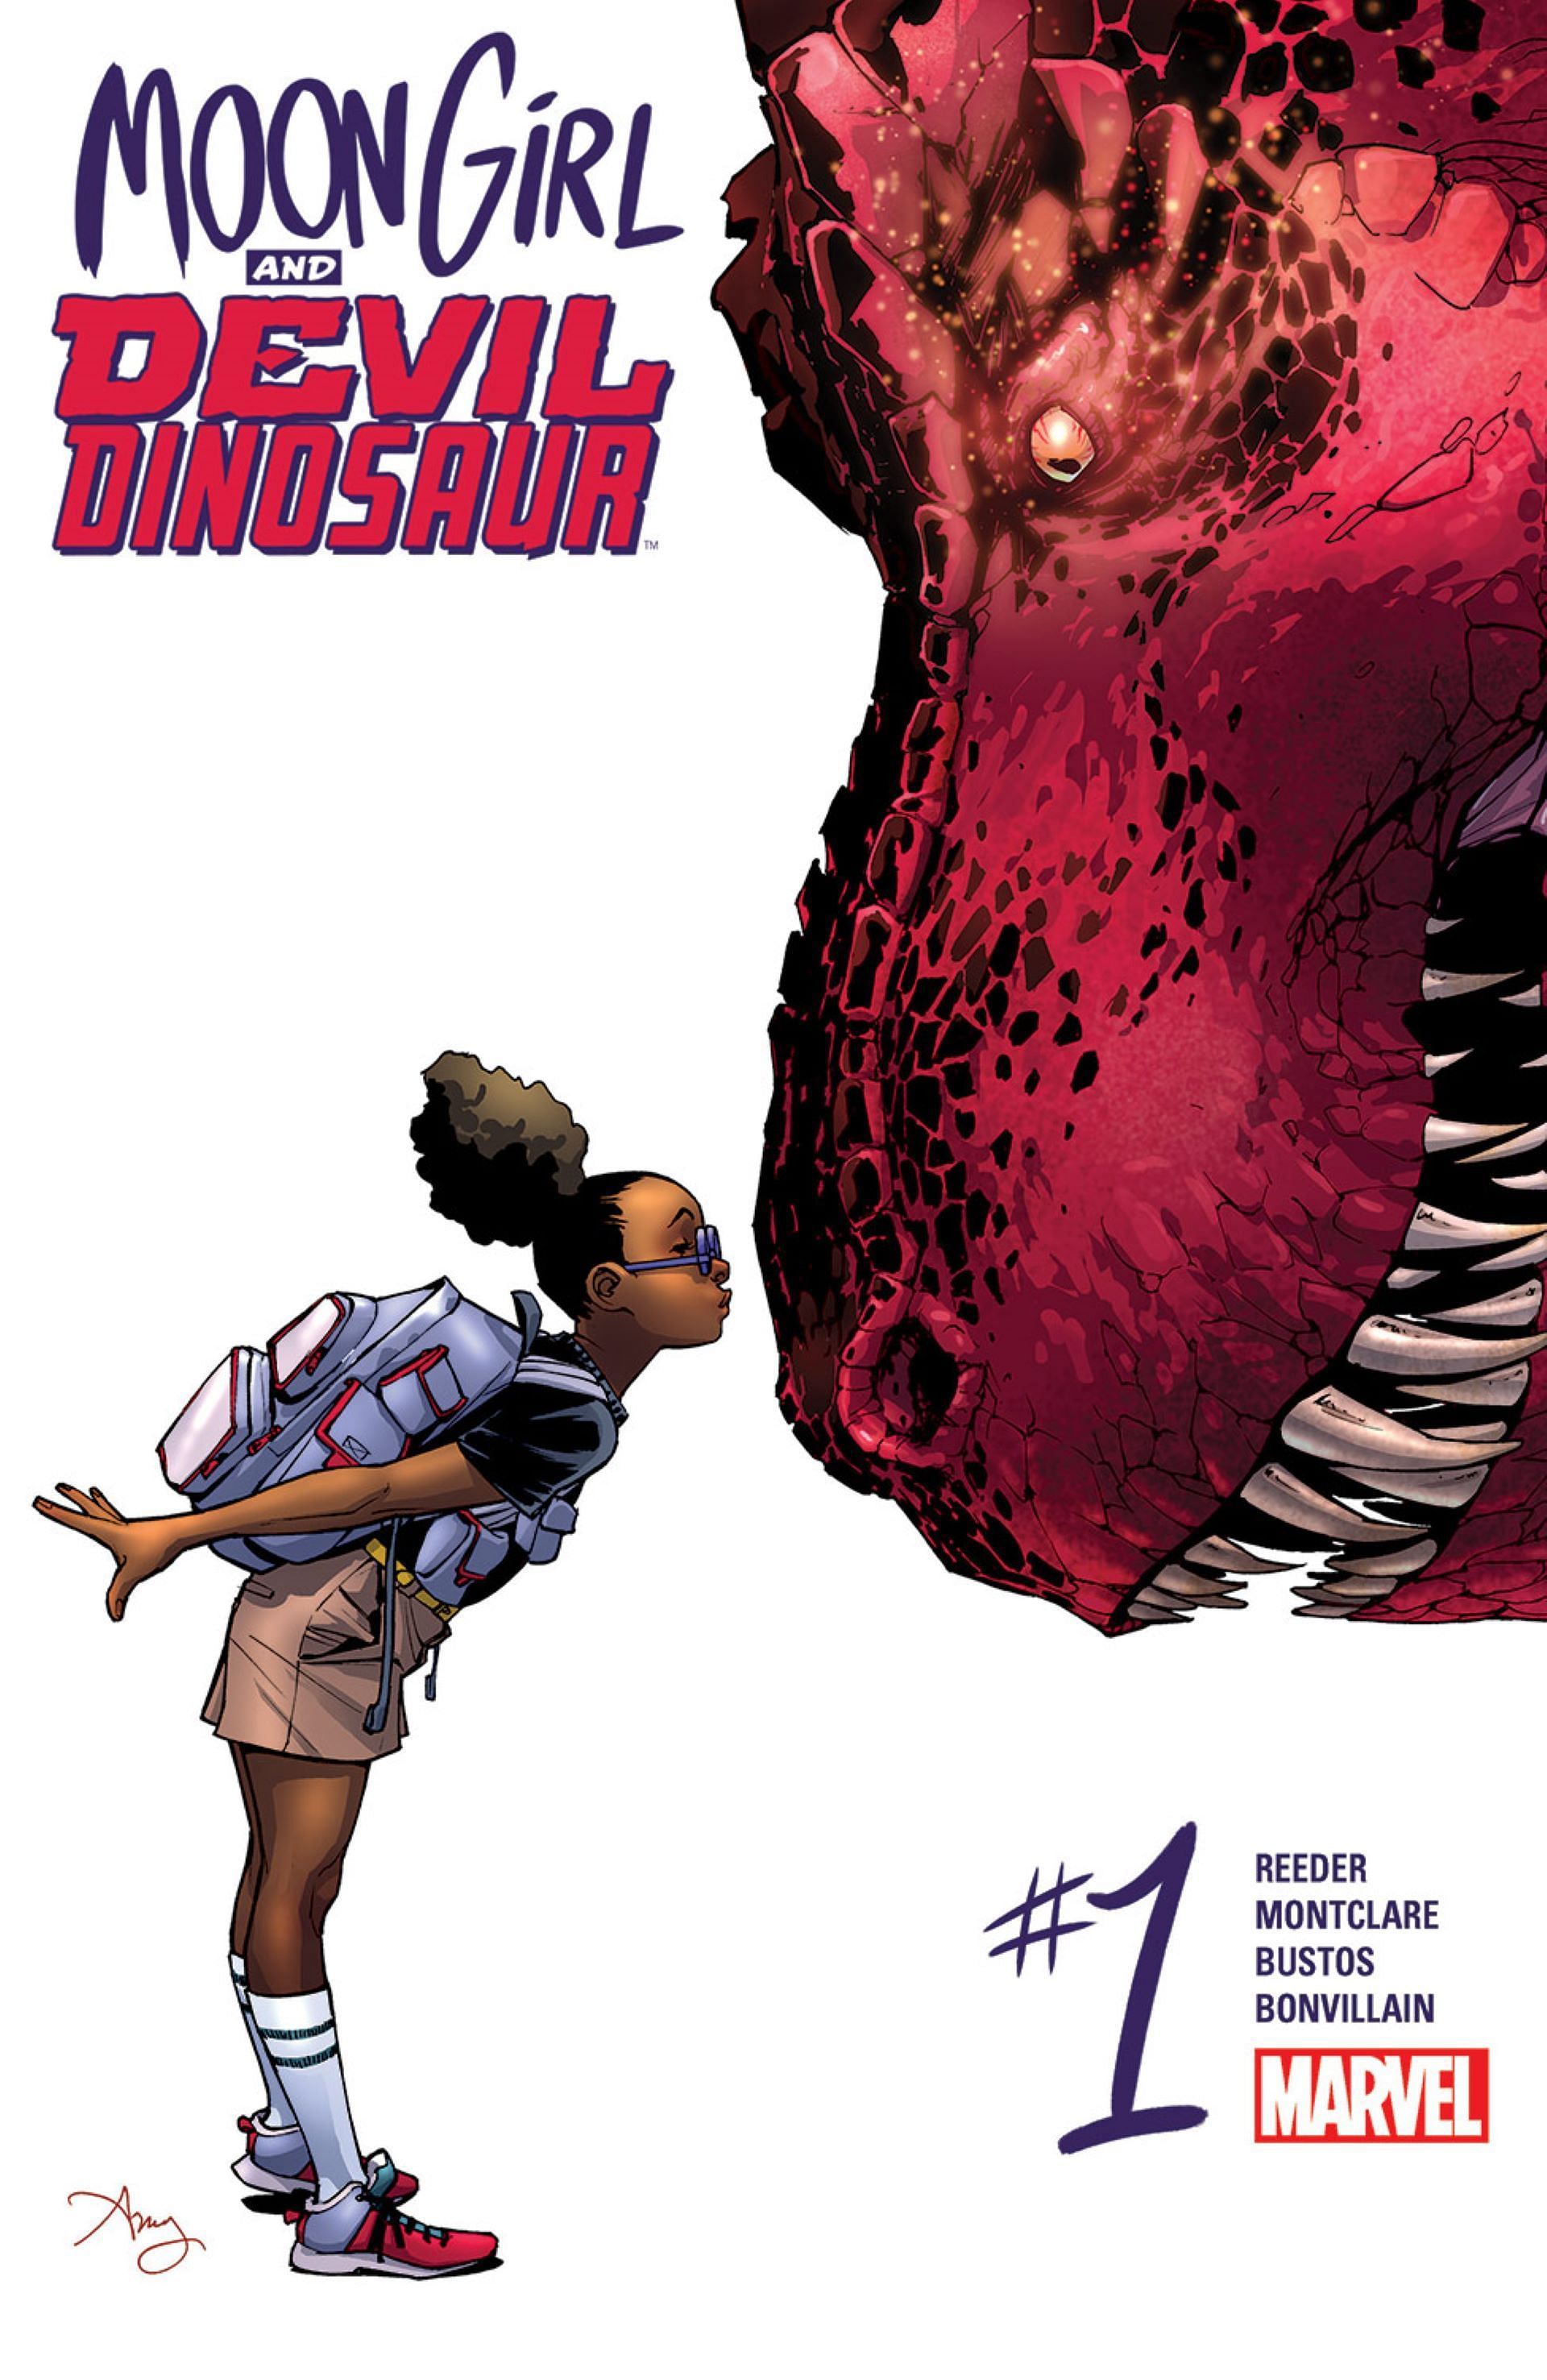 Moon Girl and Devil Dinosaur #1 (Image via Marvel)